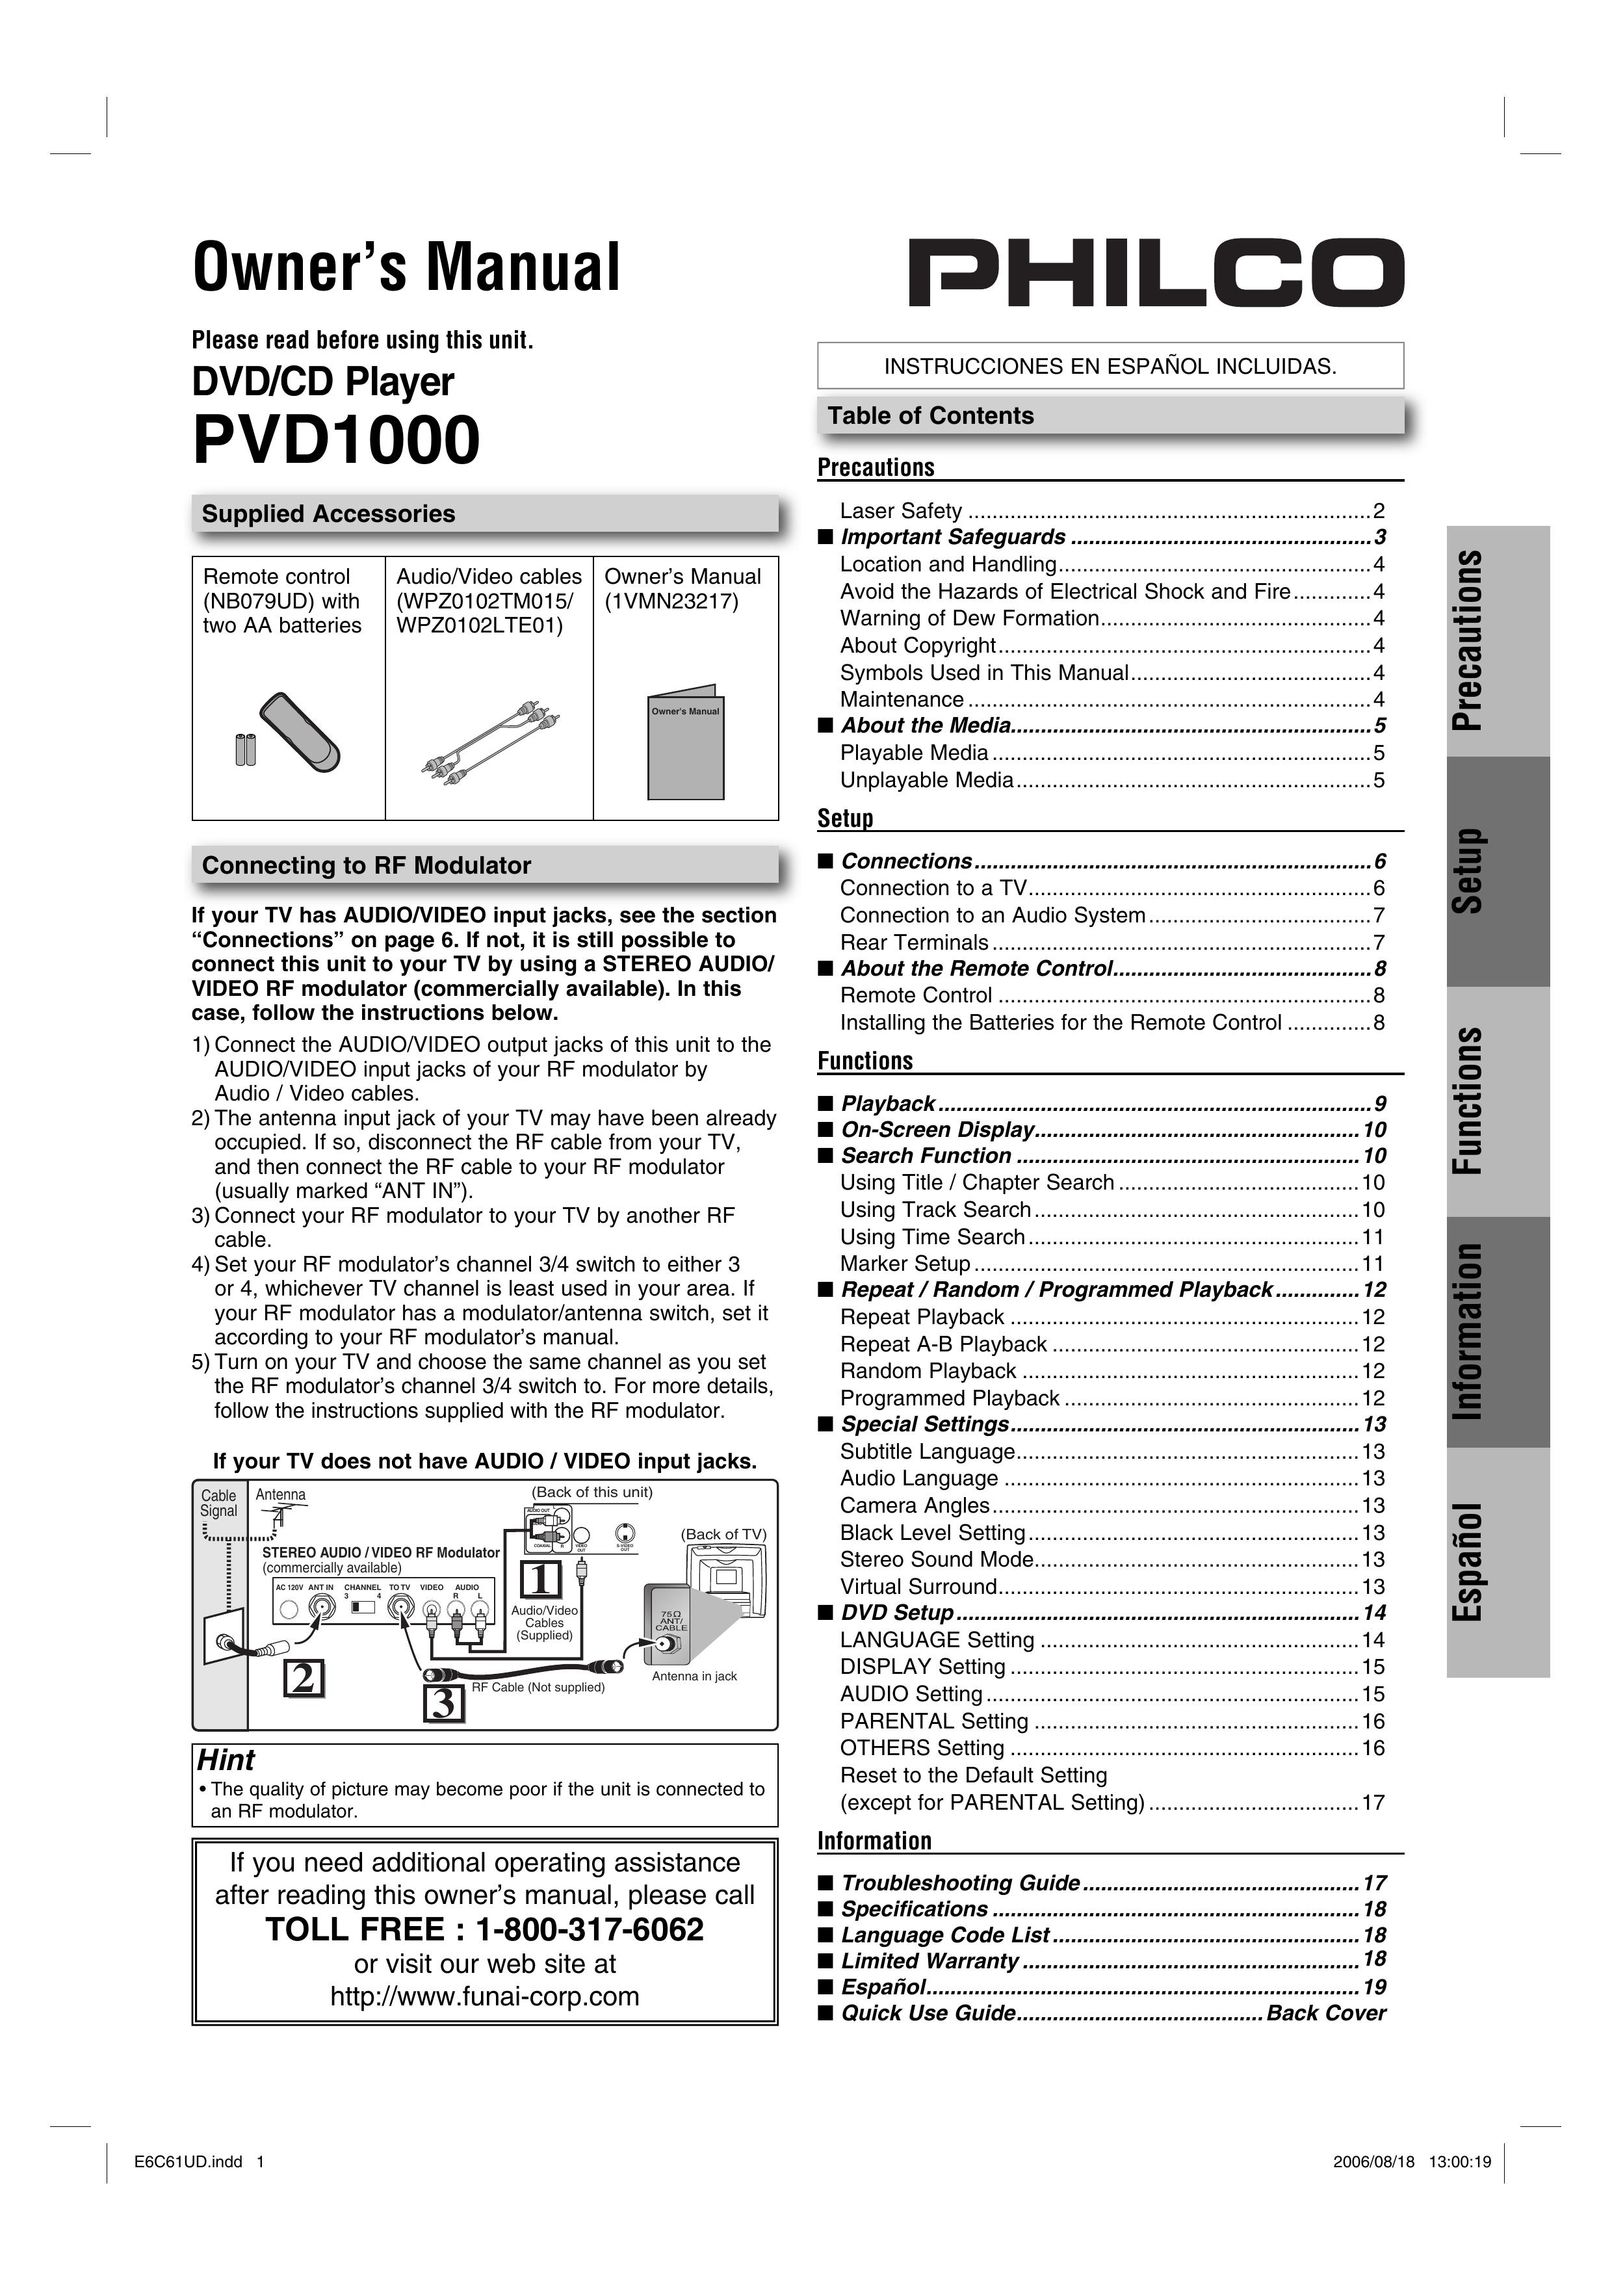 Philco Crafts PVD1000 DVD Player User Manual